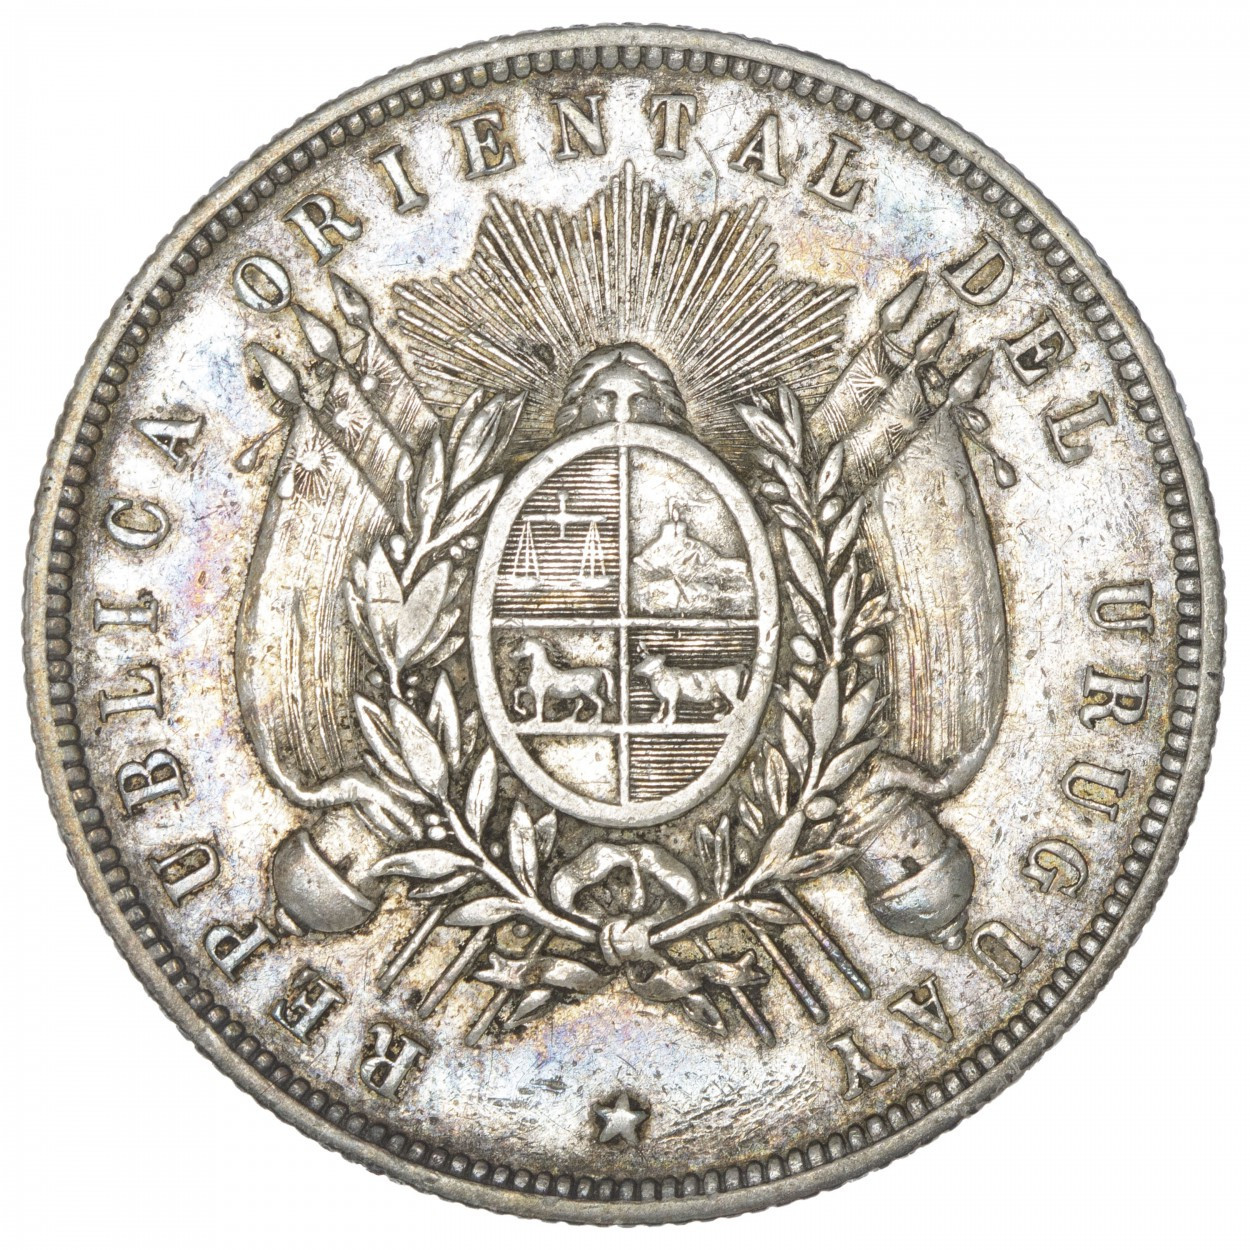 Uruguay - 1 peso - 1877 A avers